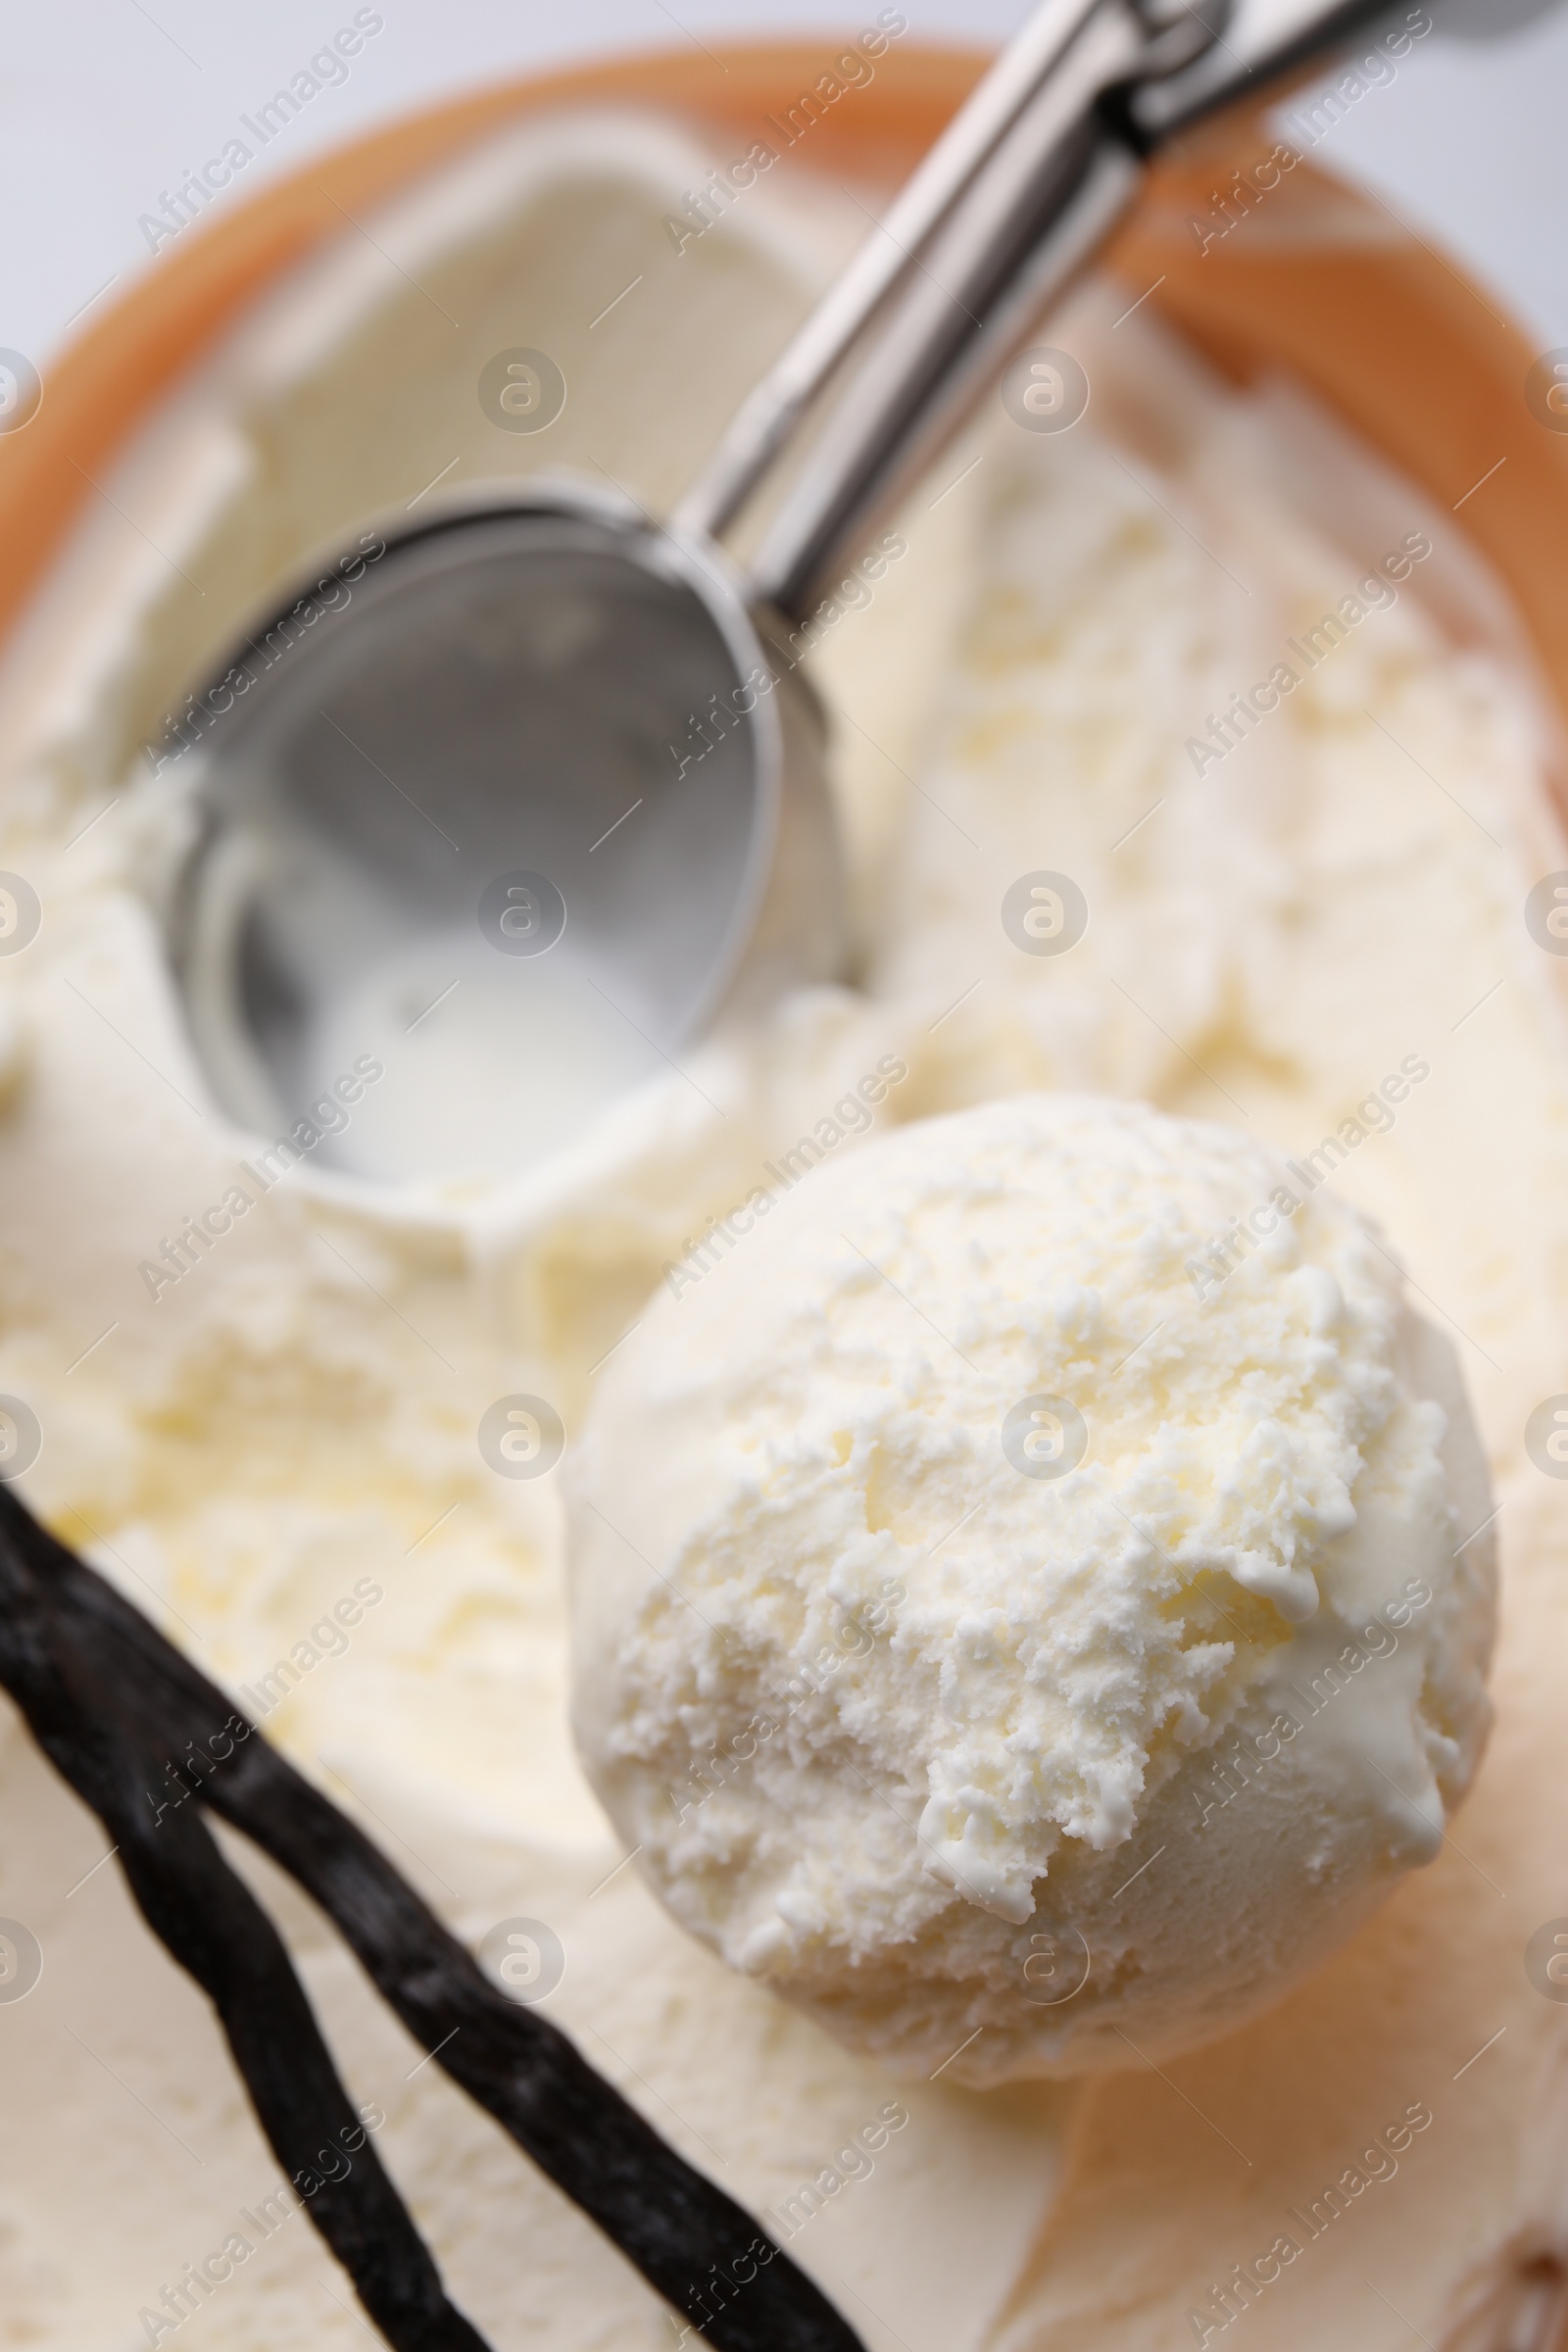 Photo of Delicious ice cream, scoop and vanilla pods in container, closeup